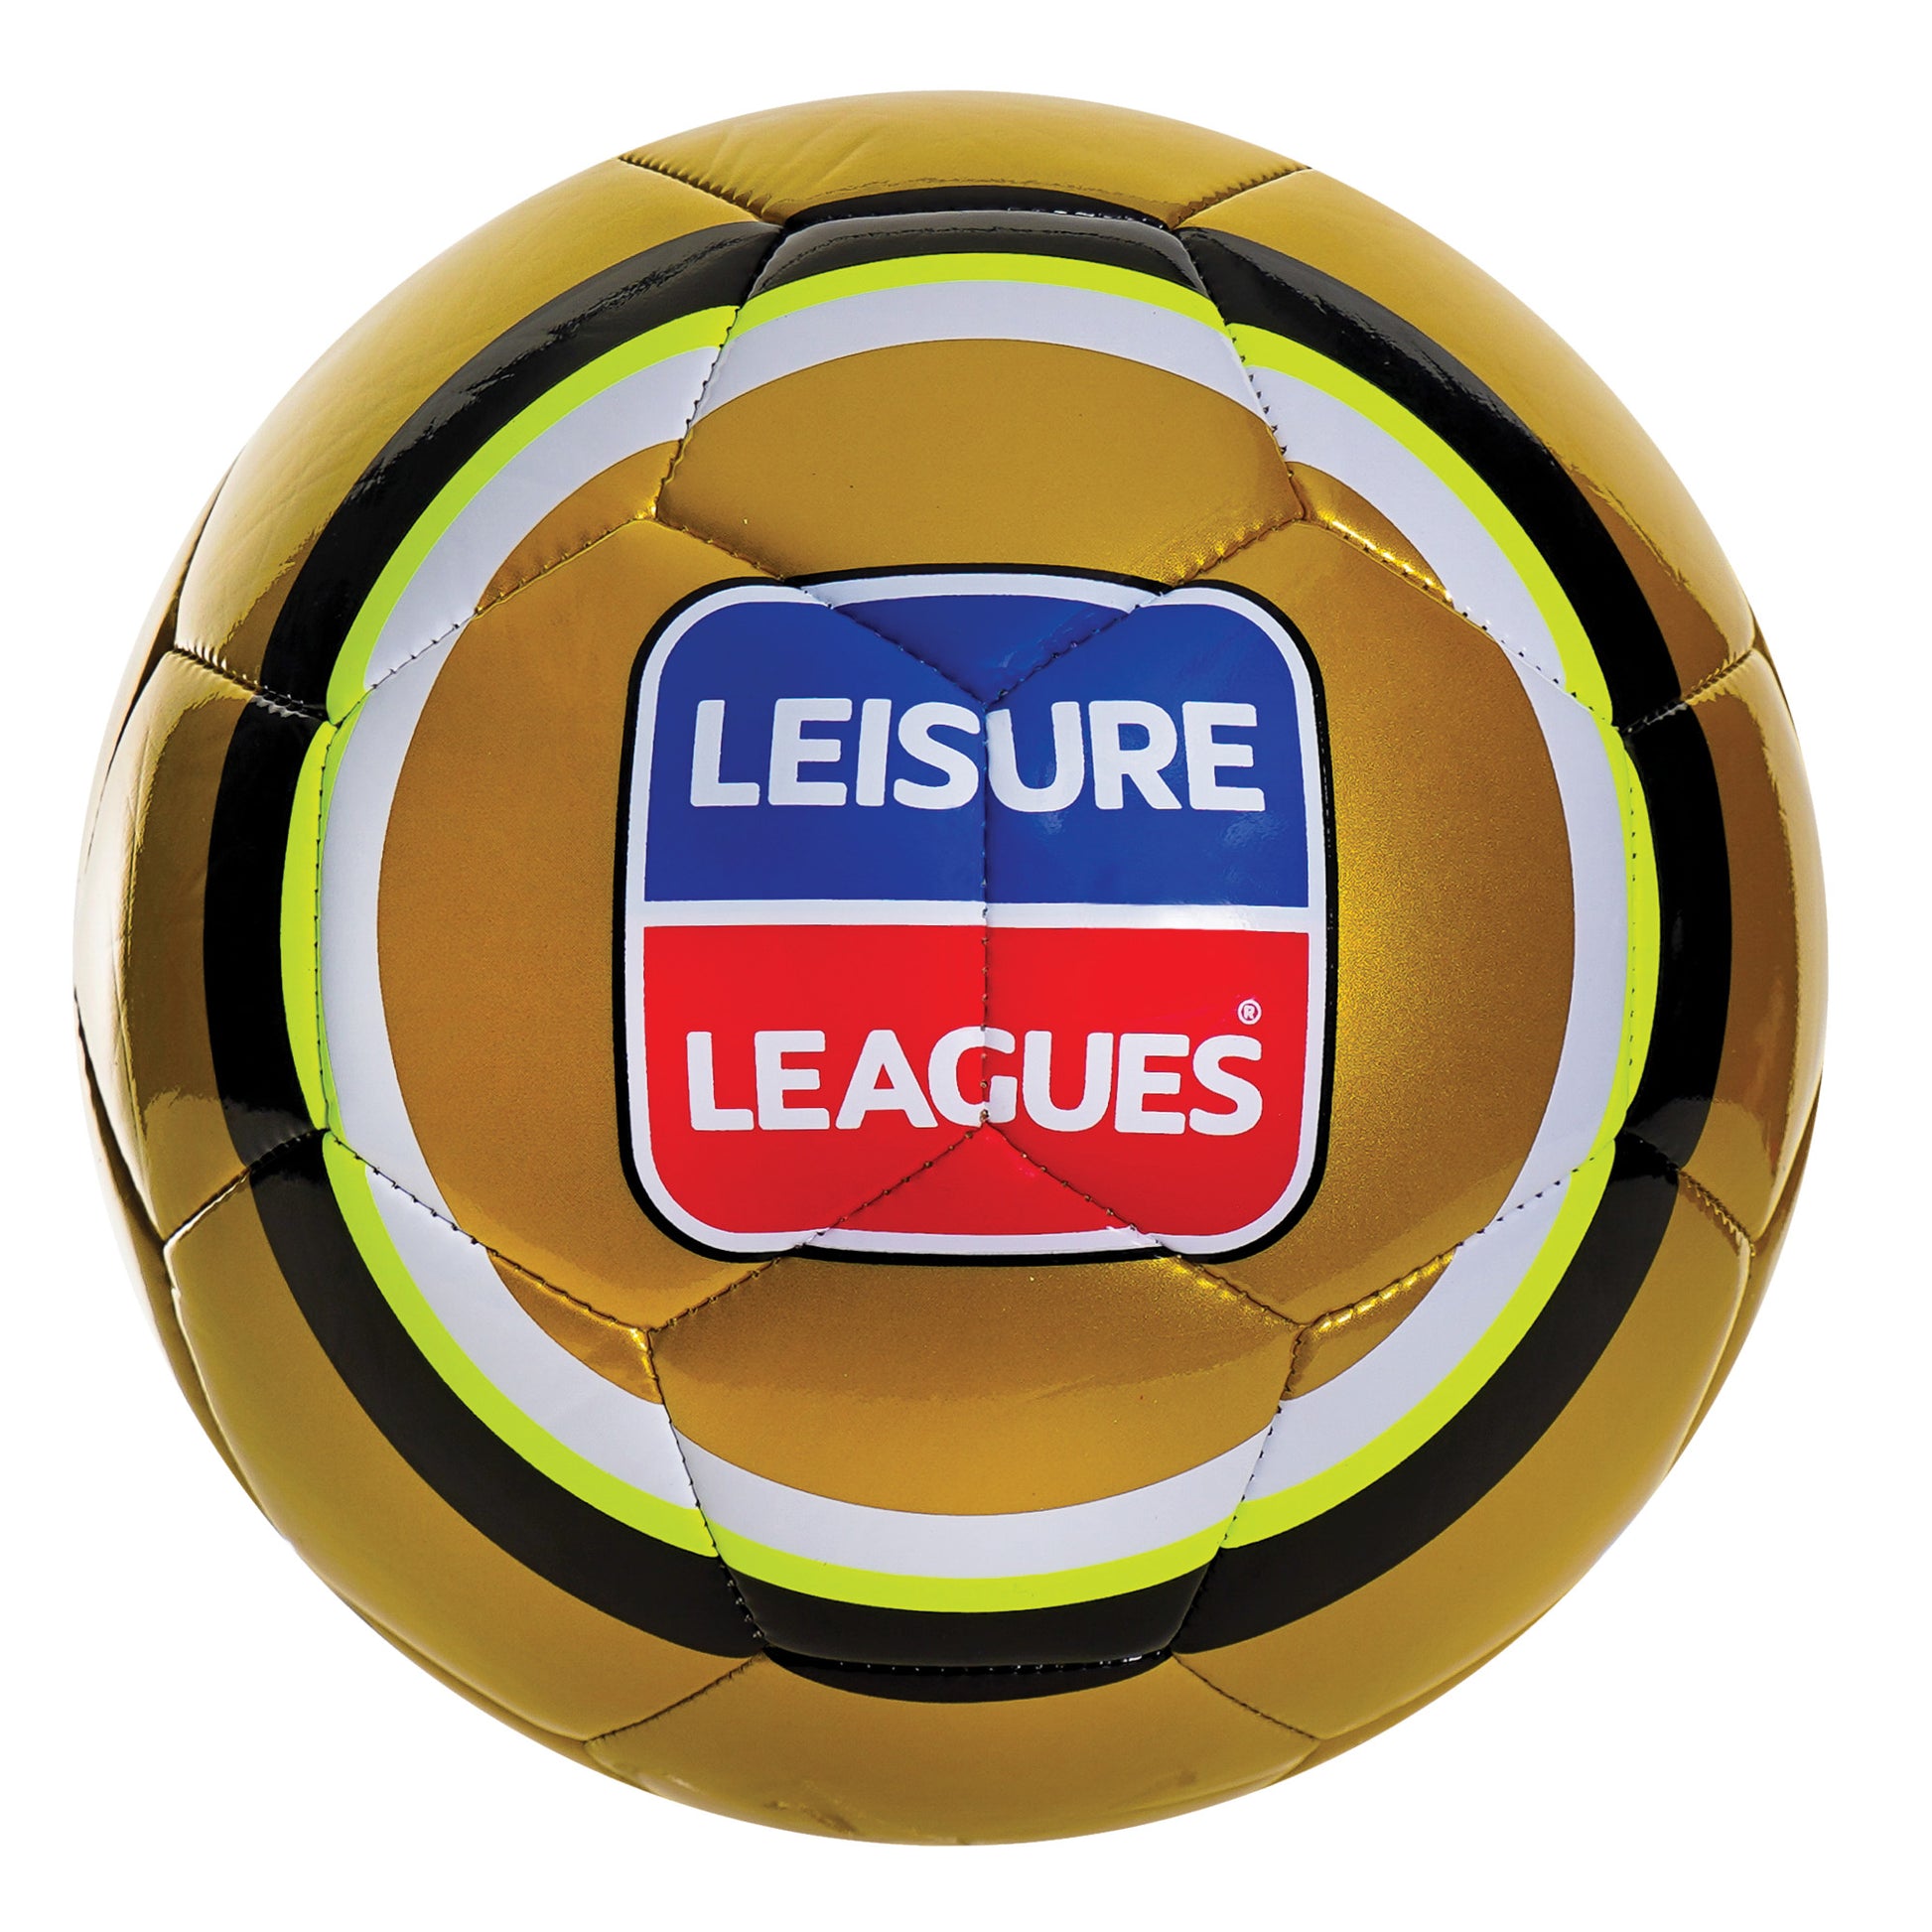 Leisure leagues football Size 5 Football Gold